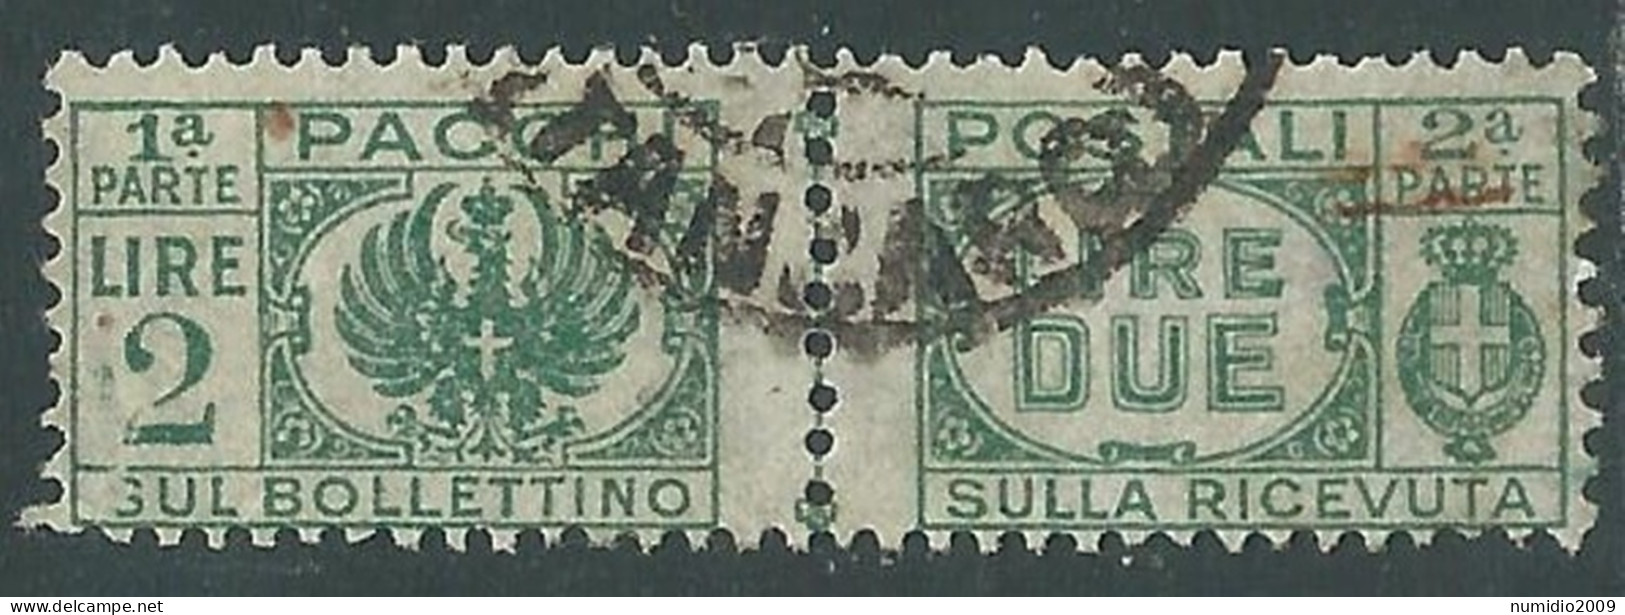 1946 LUOGOTENENZA PACCHI POSTALI USATO 2 LIRE - I18-9 - Postal Parcels